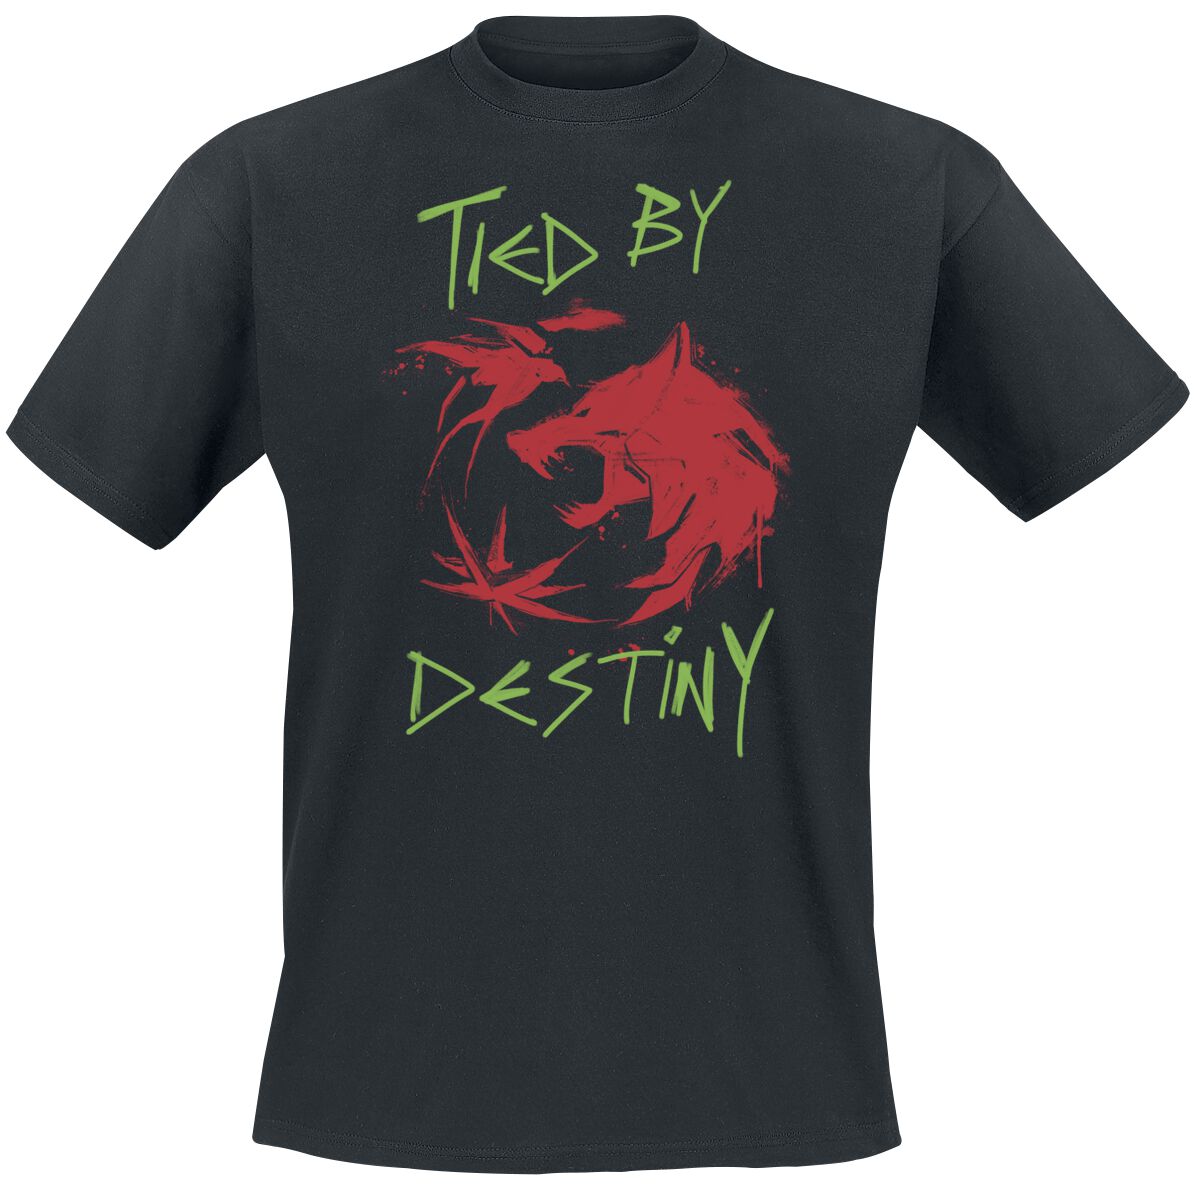 The Witcher Season 3 - Destiny T-Shirt schwarz in L